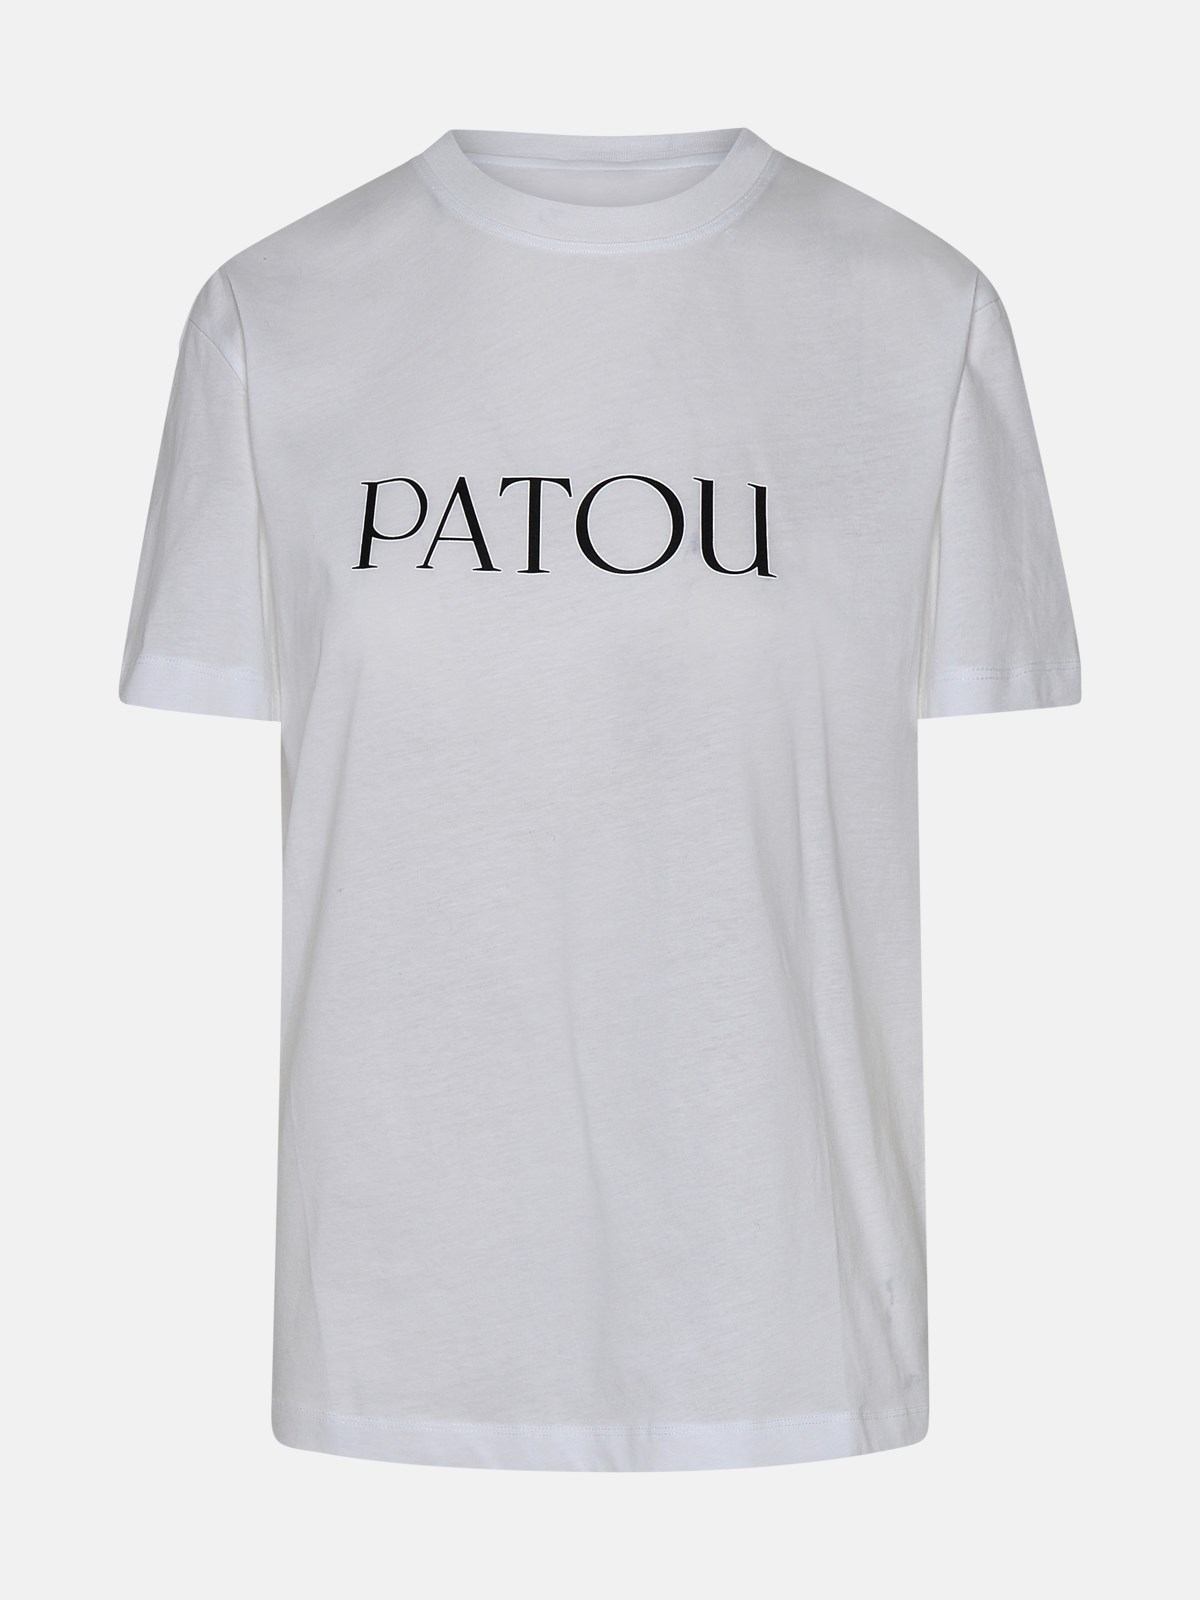 Patou T-shirt Essential Logo In White